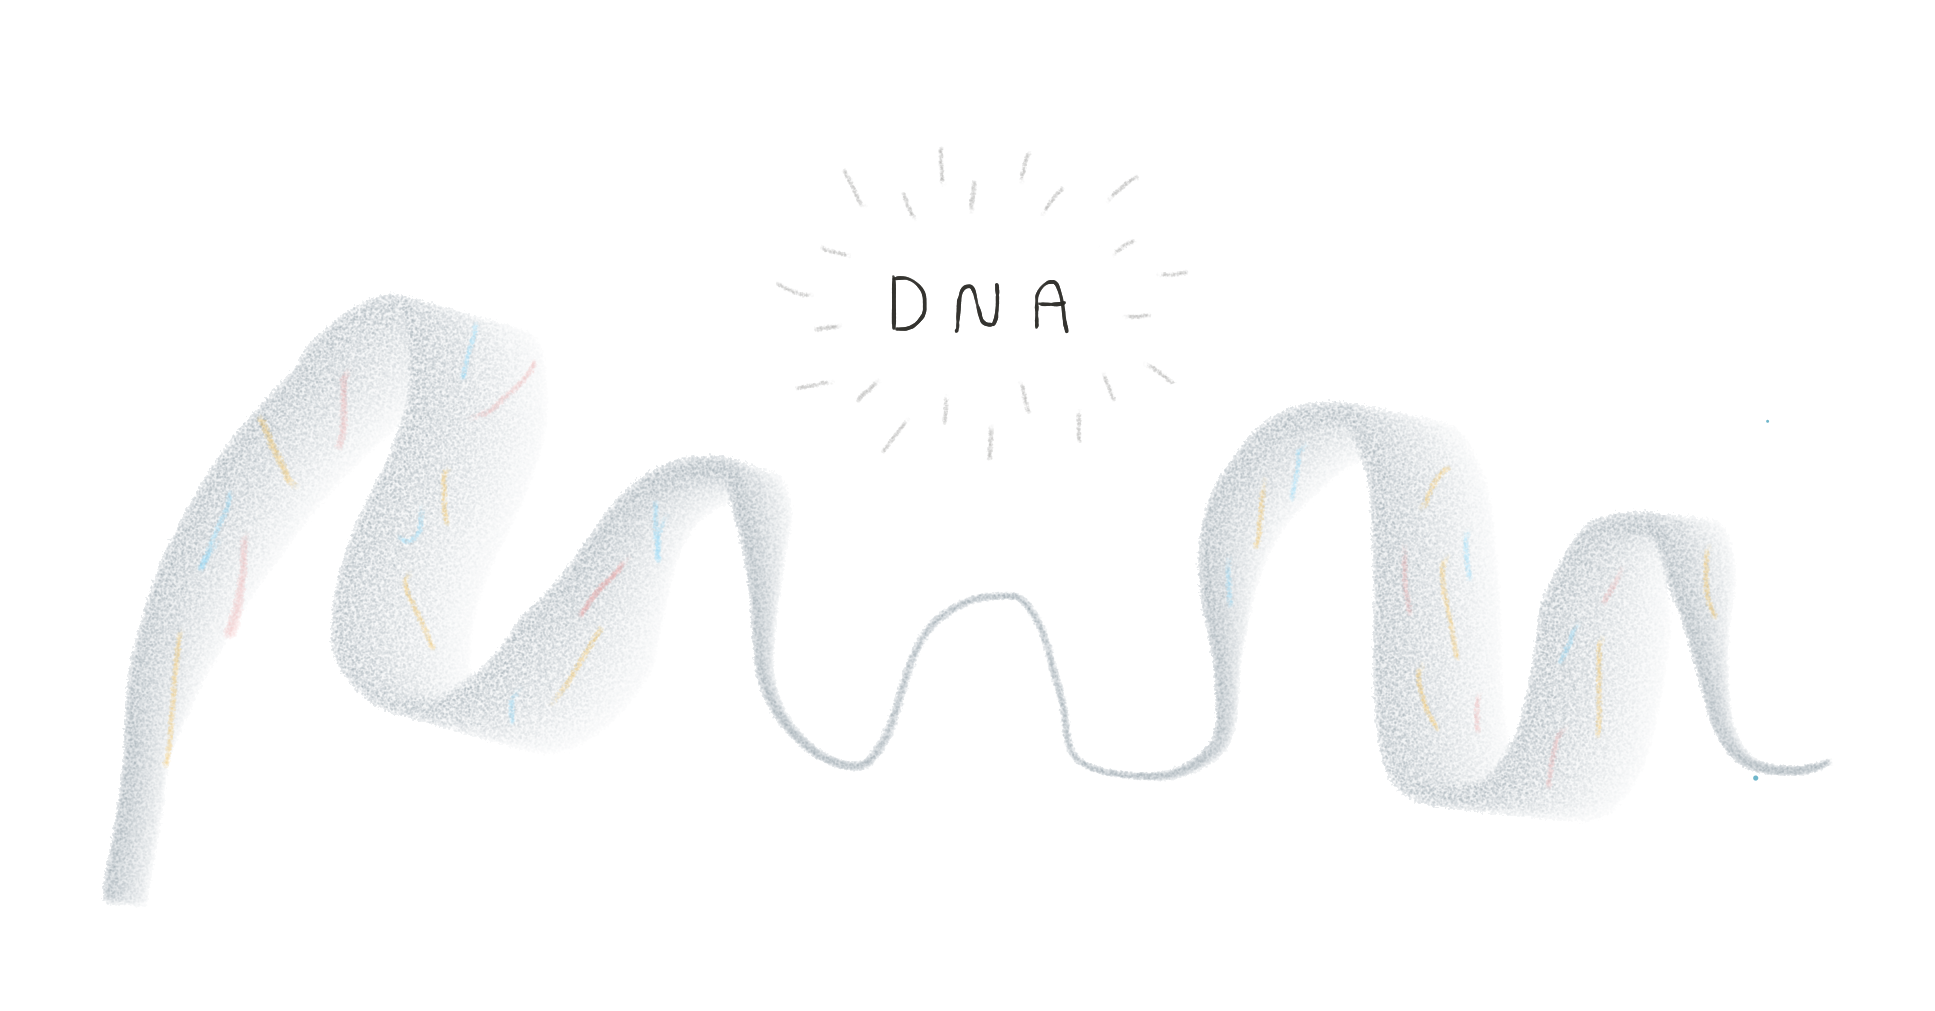  DNA illustration. 